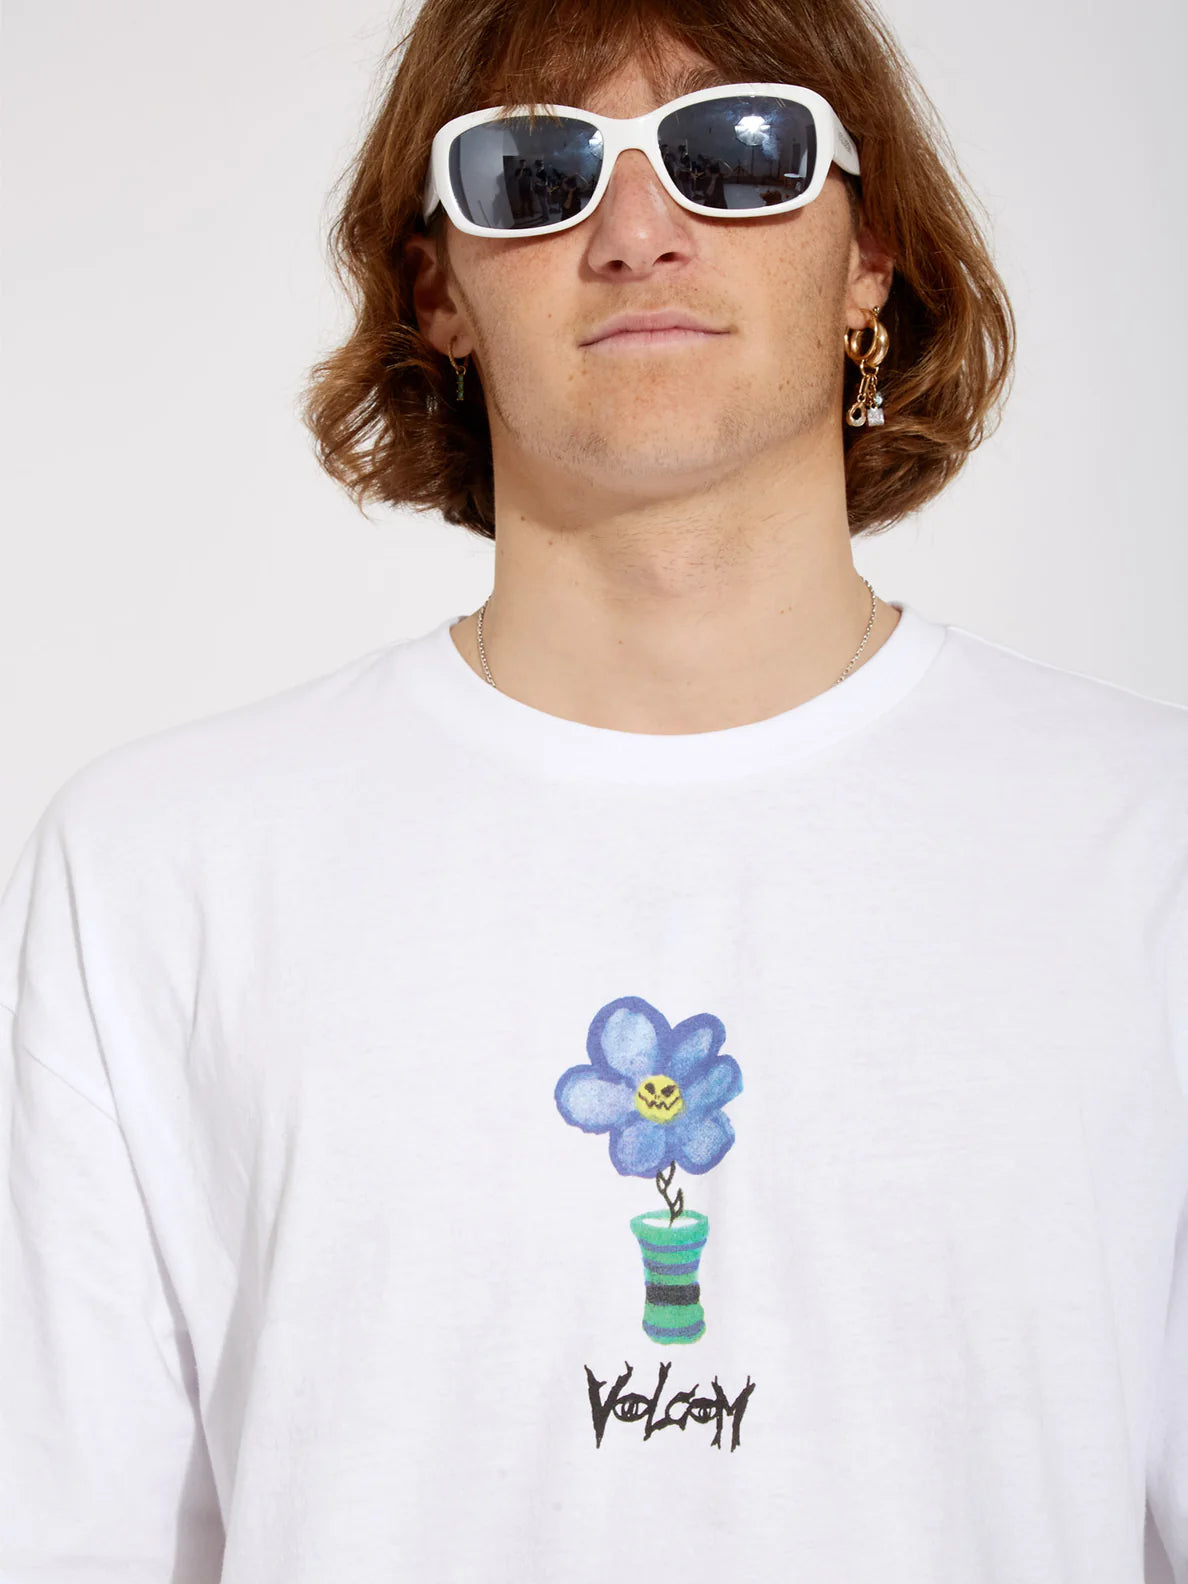 Camiseta Volcom Issamtherapy - White | Camisetas de hombre | Camisetas manga corta de hombre | Volcom Shop | surfdevils.com